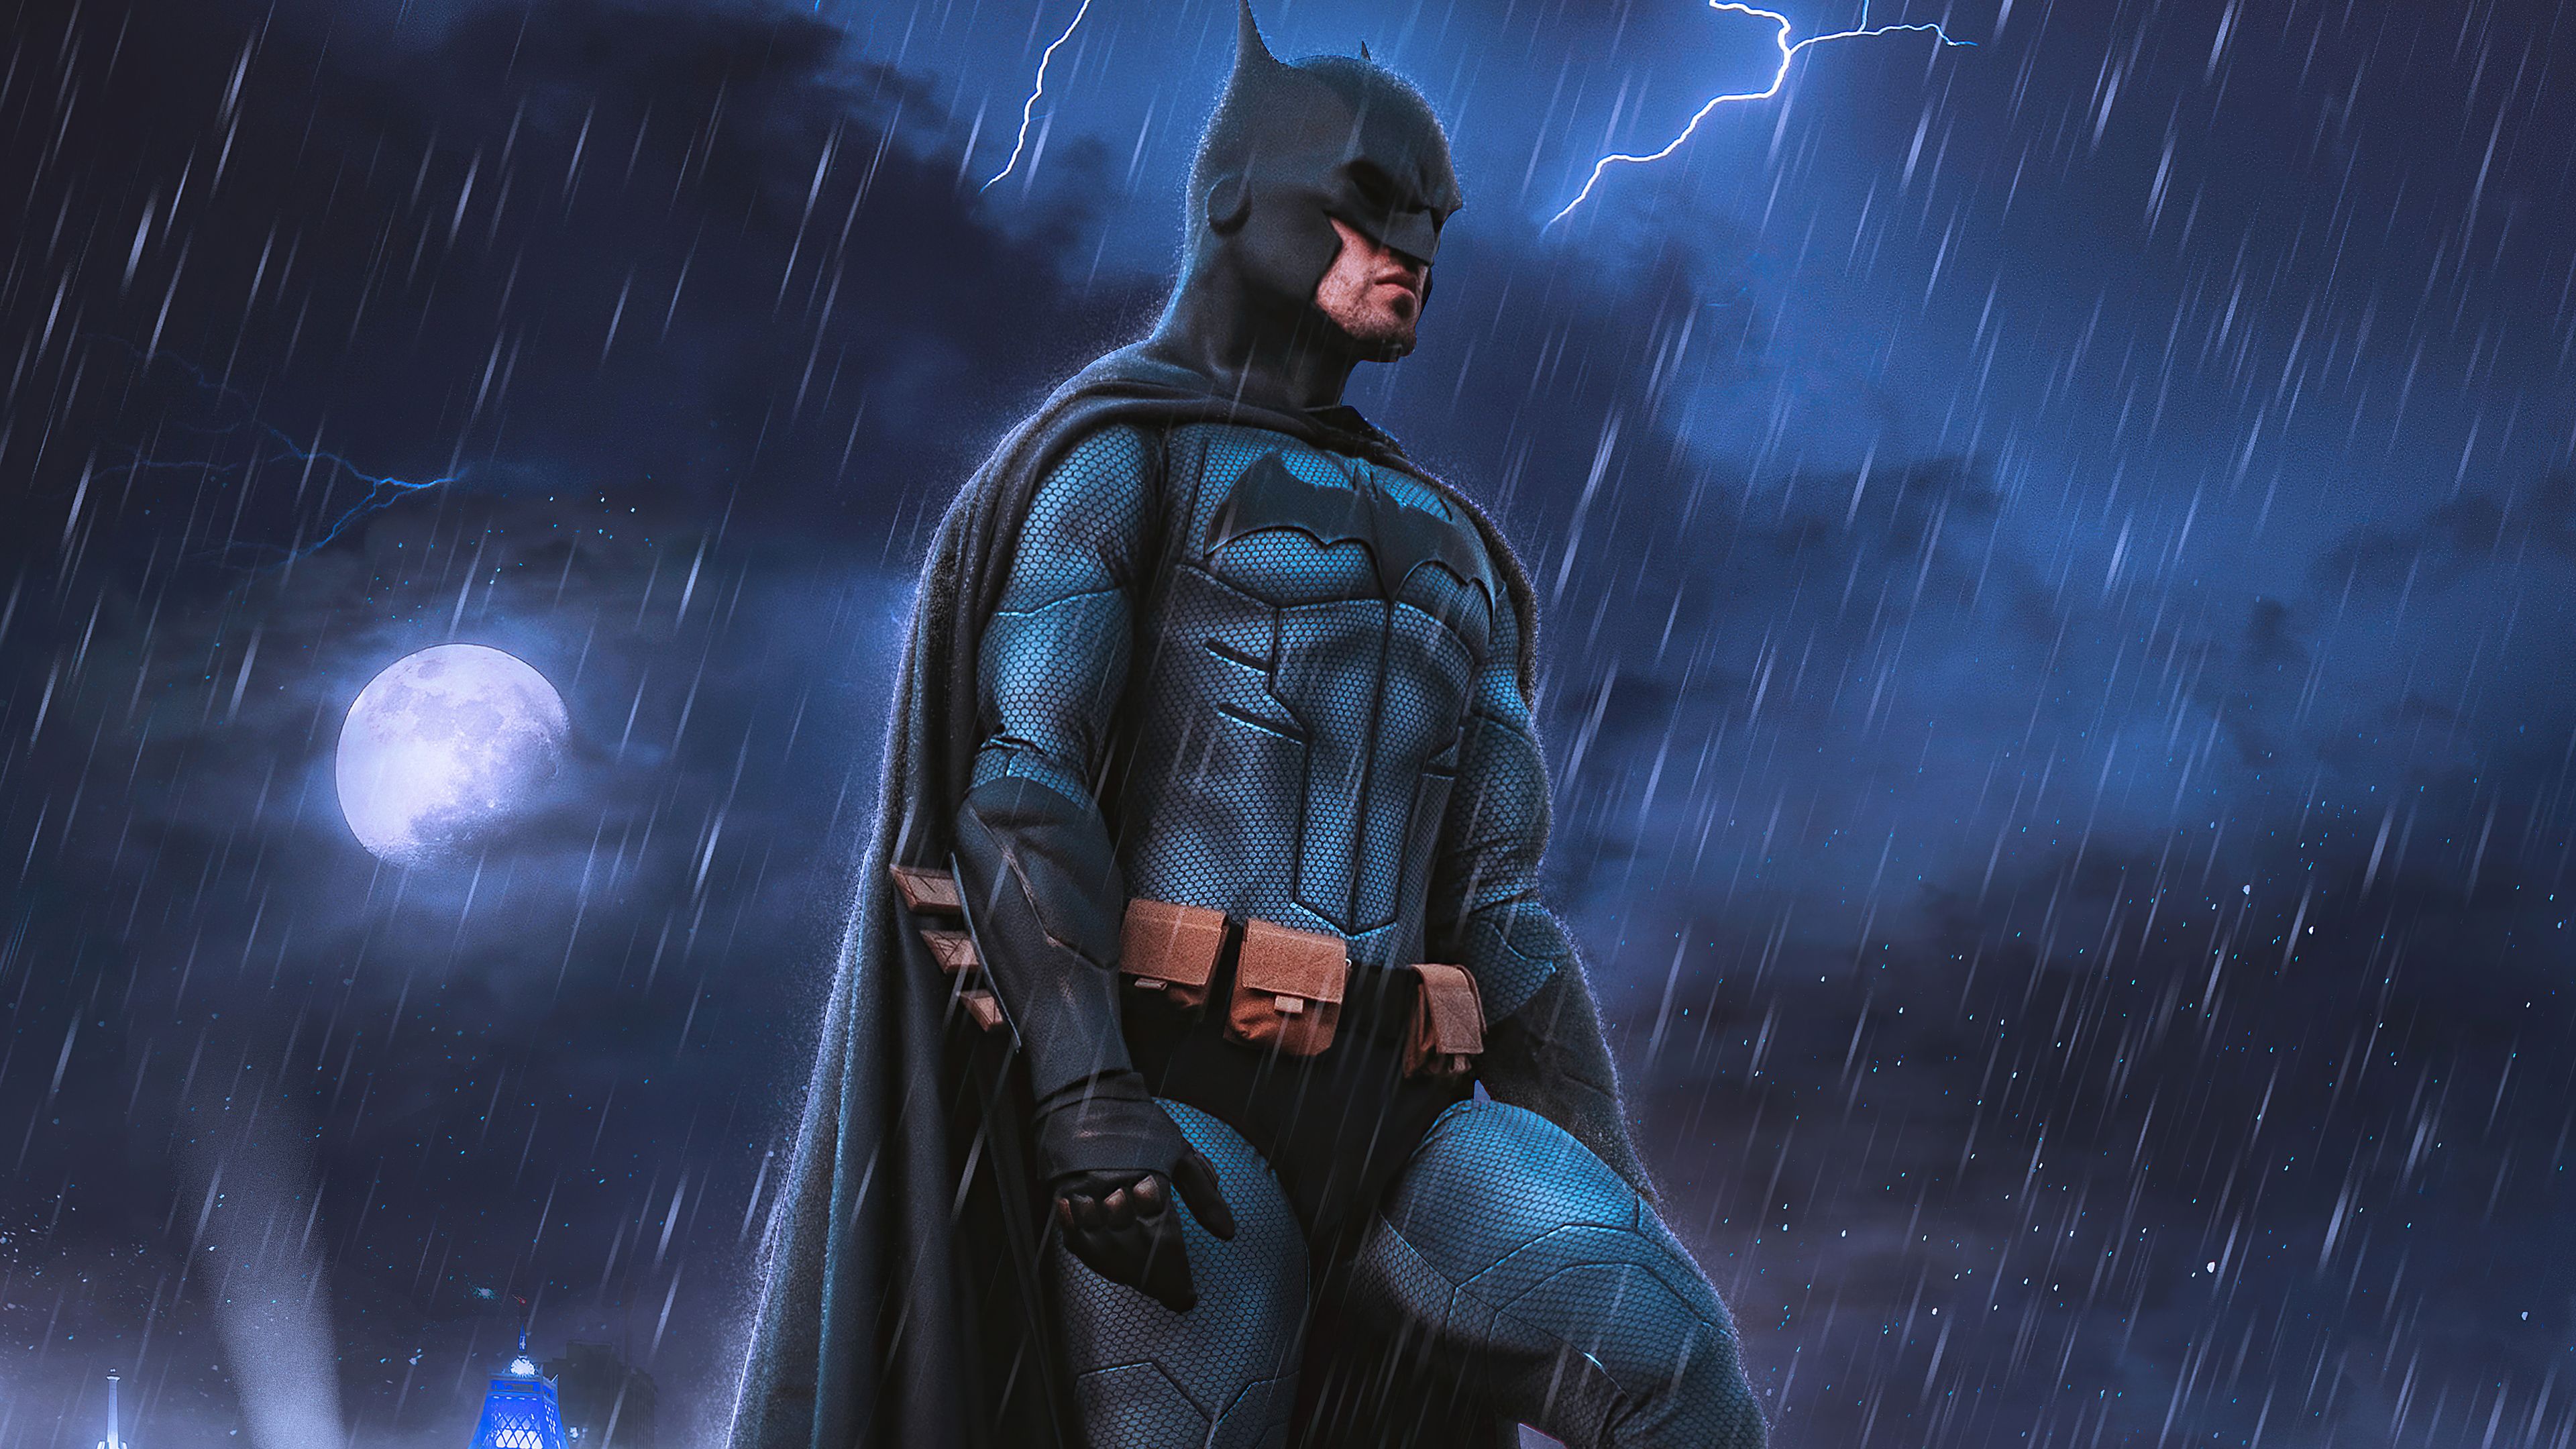  Batman Hintergrundbild 3840x2160. The Batman Lightning 4k, HD Superheroes, 4k Wallpaper, Image, Background, Photo and Picture